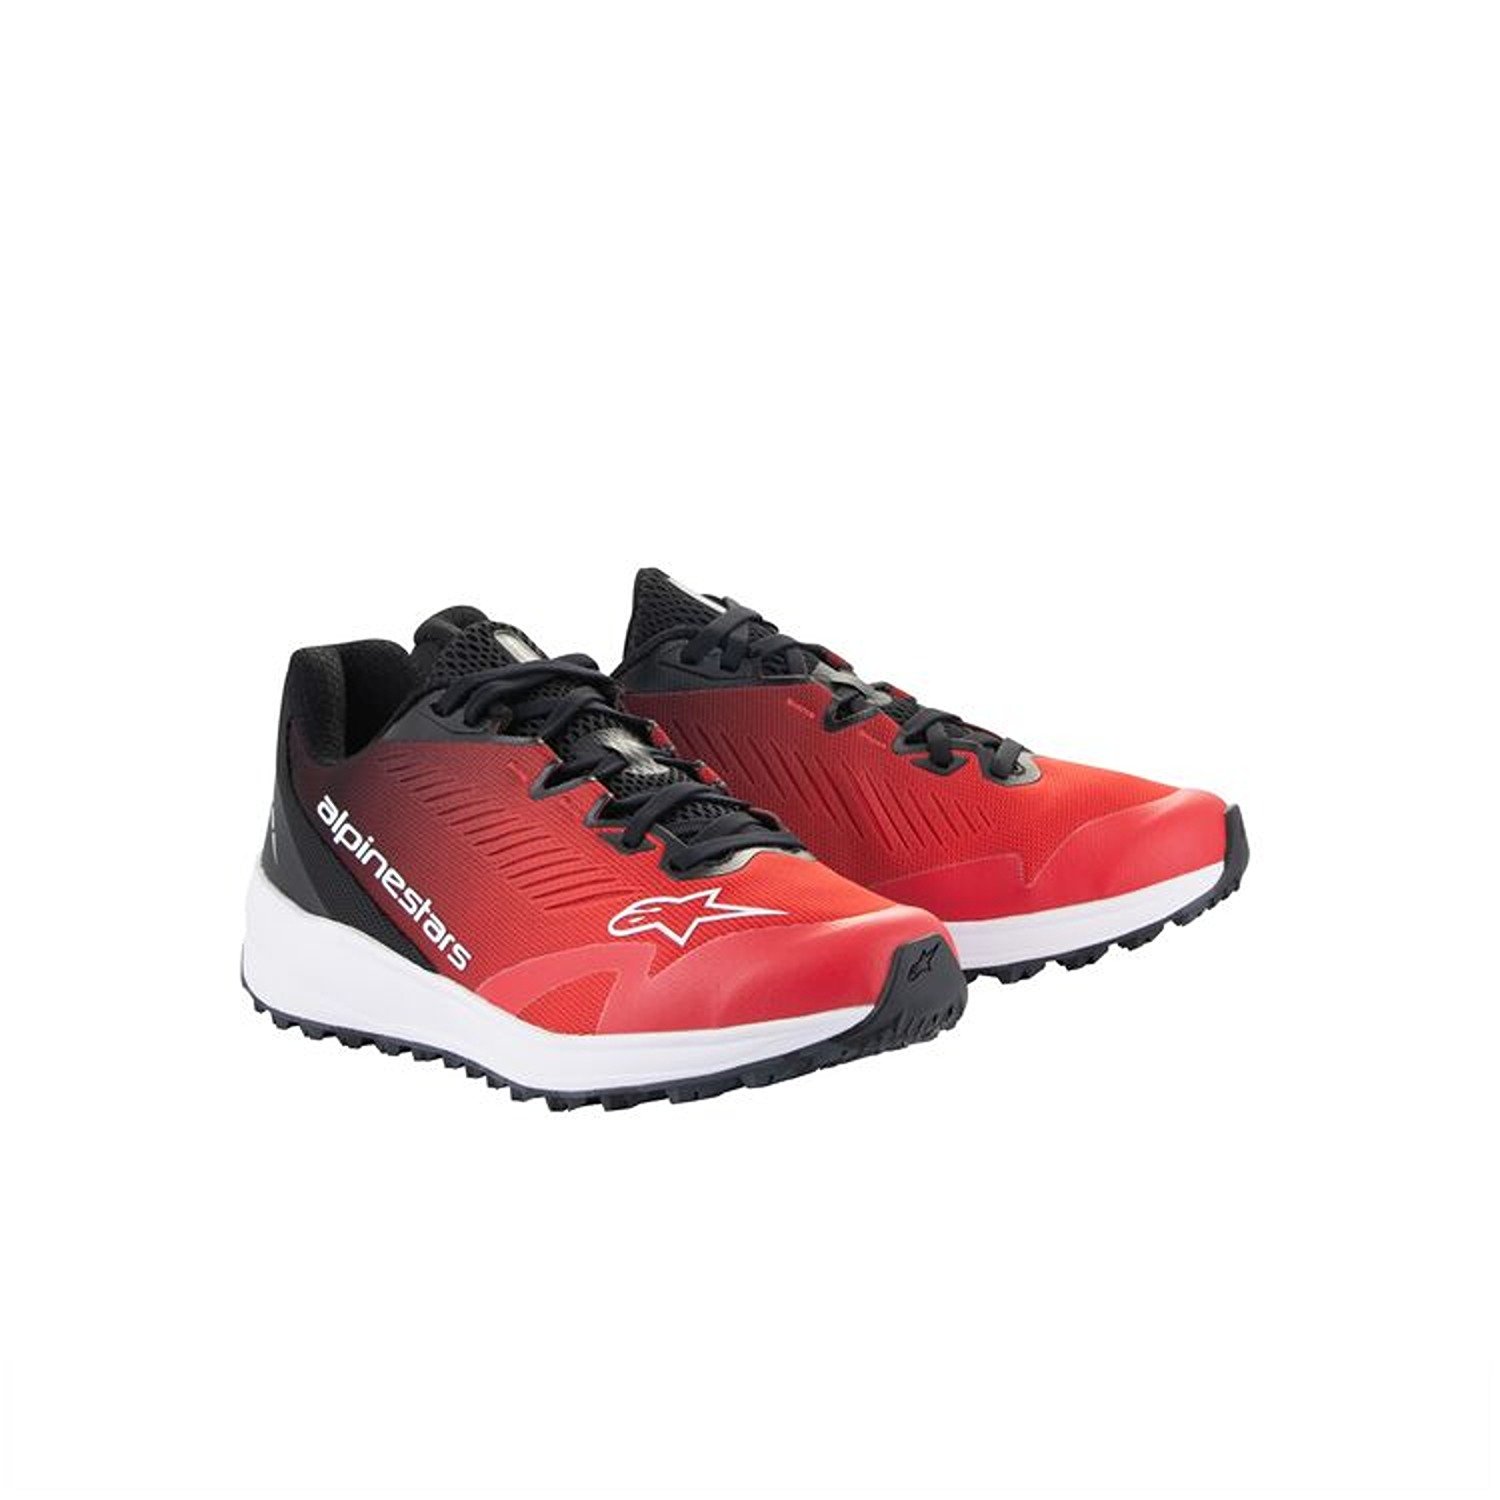 Image of Alpinestars Meta Road V2 Shoes Red Black White Size US 135 ID 8059347353654